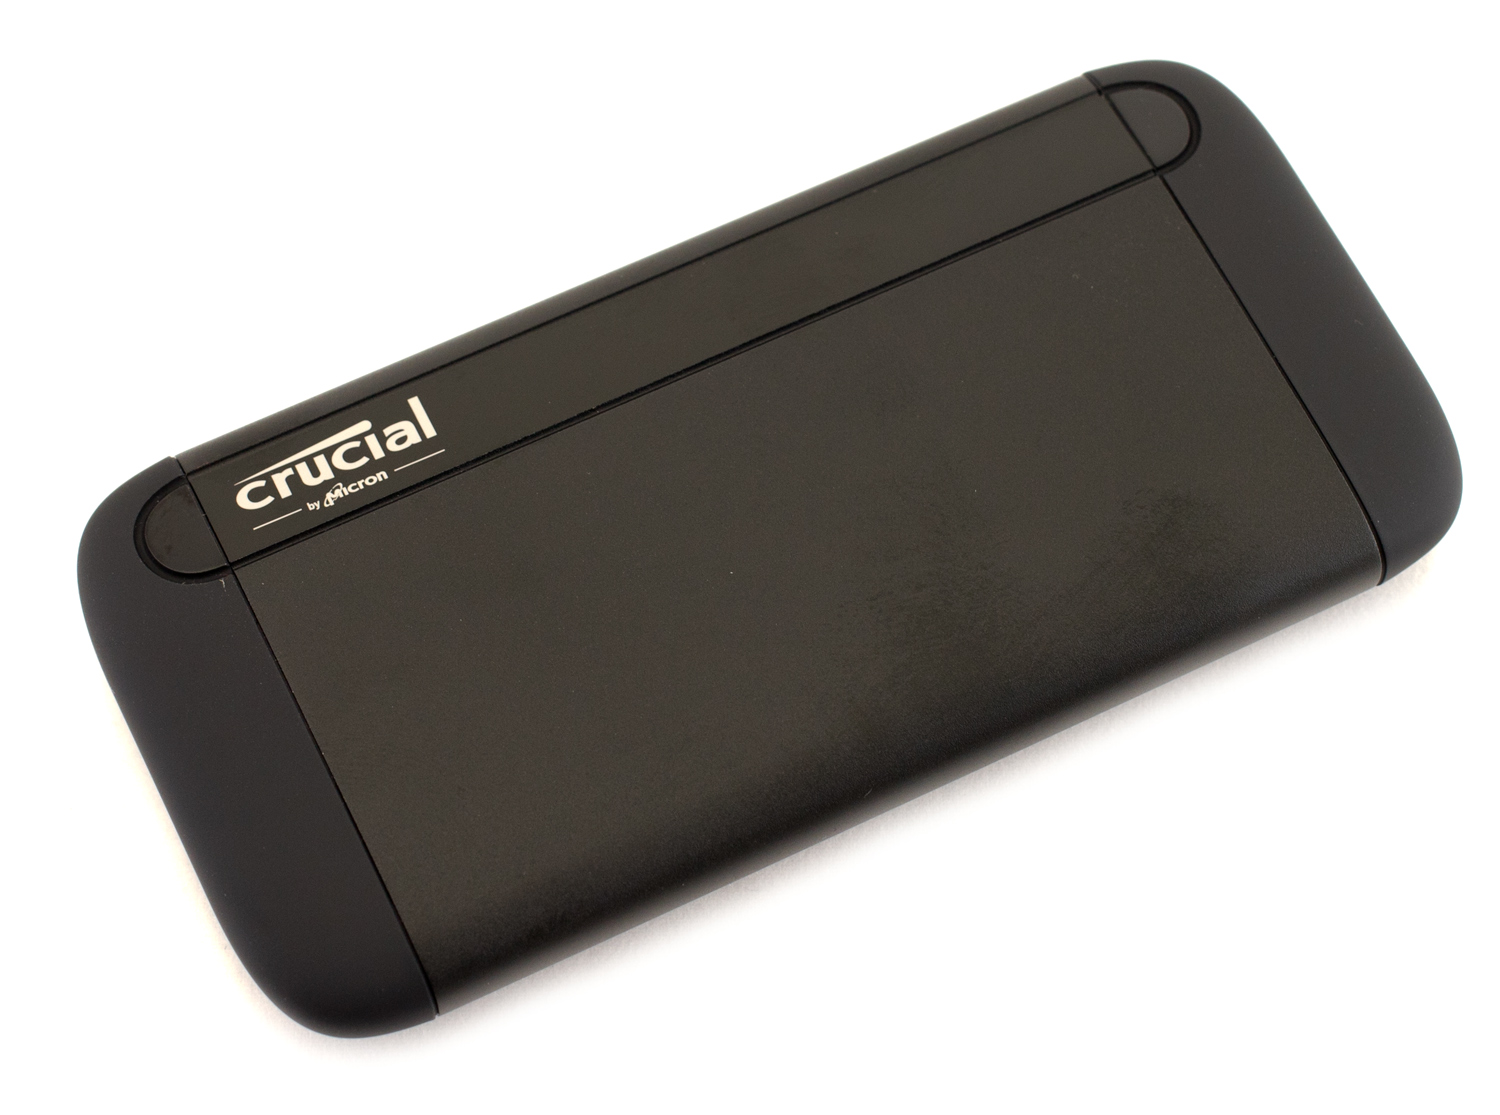 Crucial X8 1TB External SSD Review